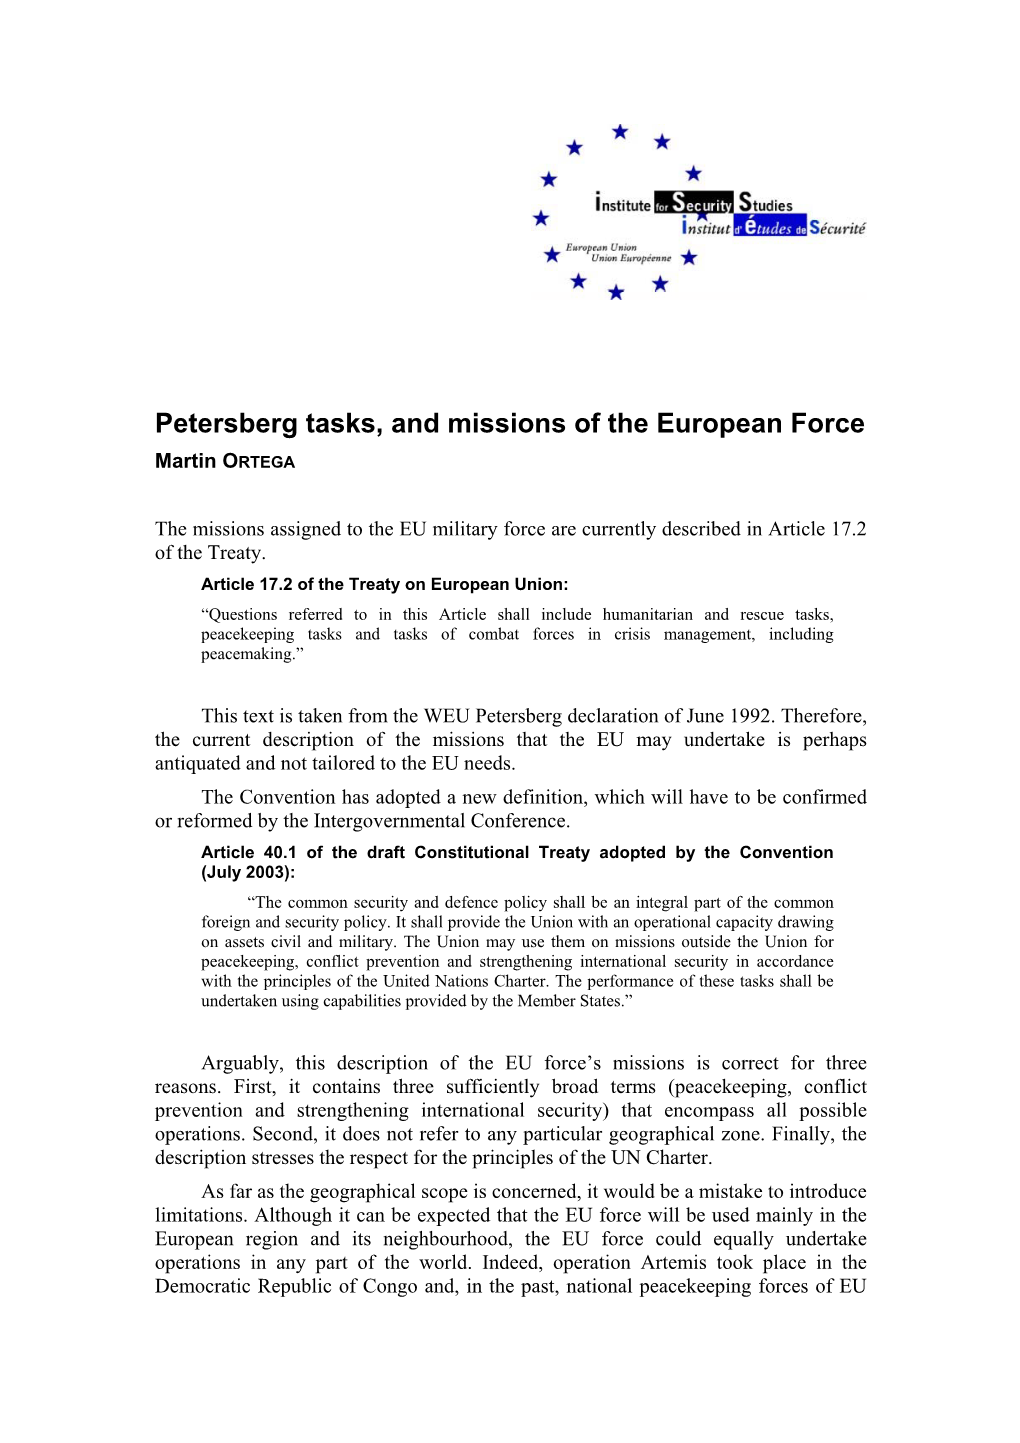 Petersberg Tasks, and Missions of the European Force Martin ORTEGA